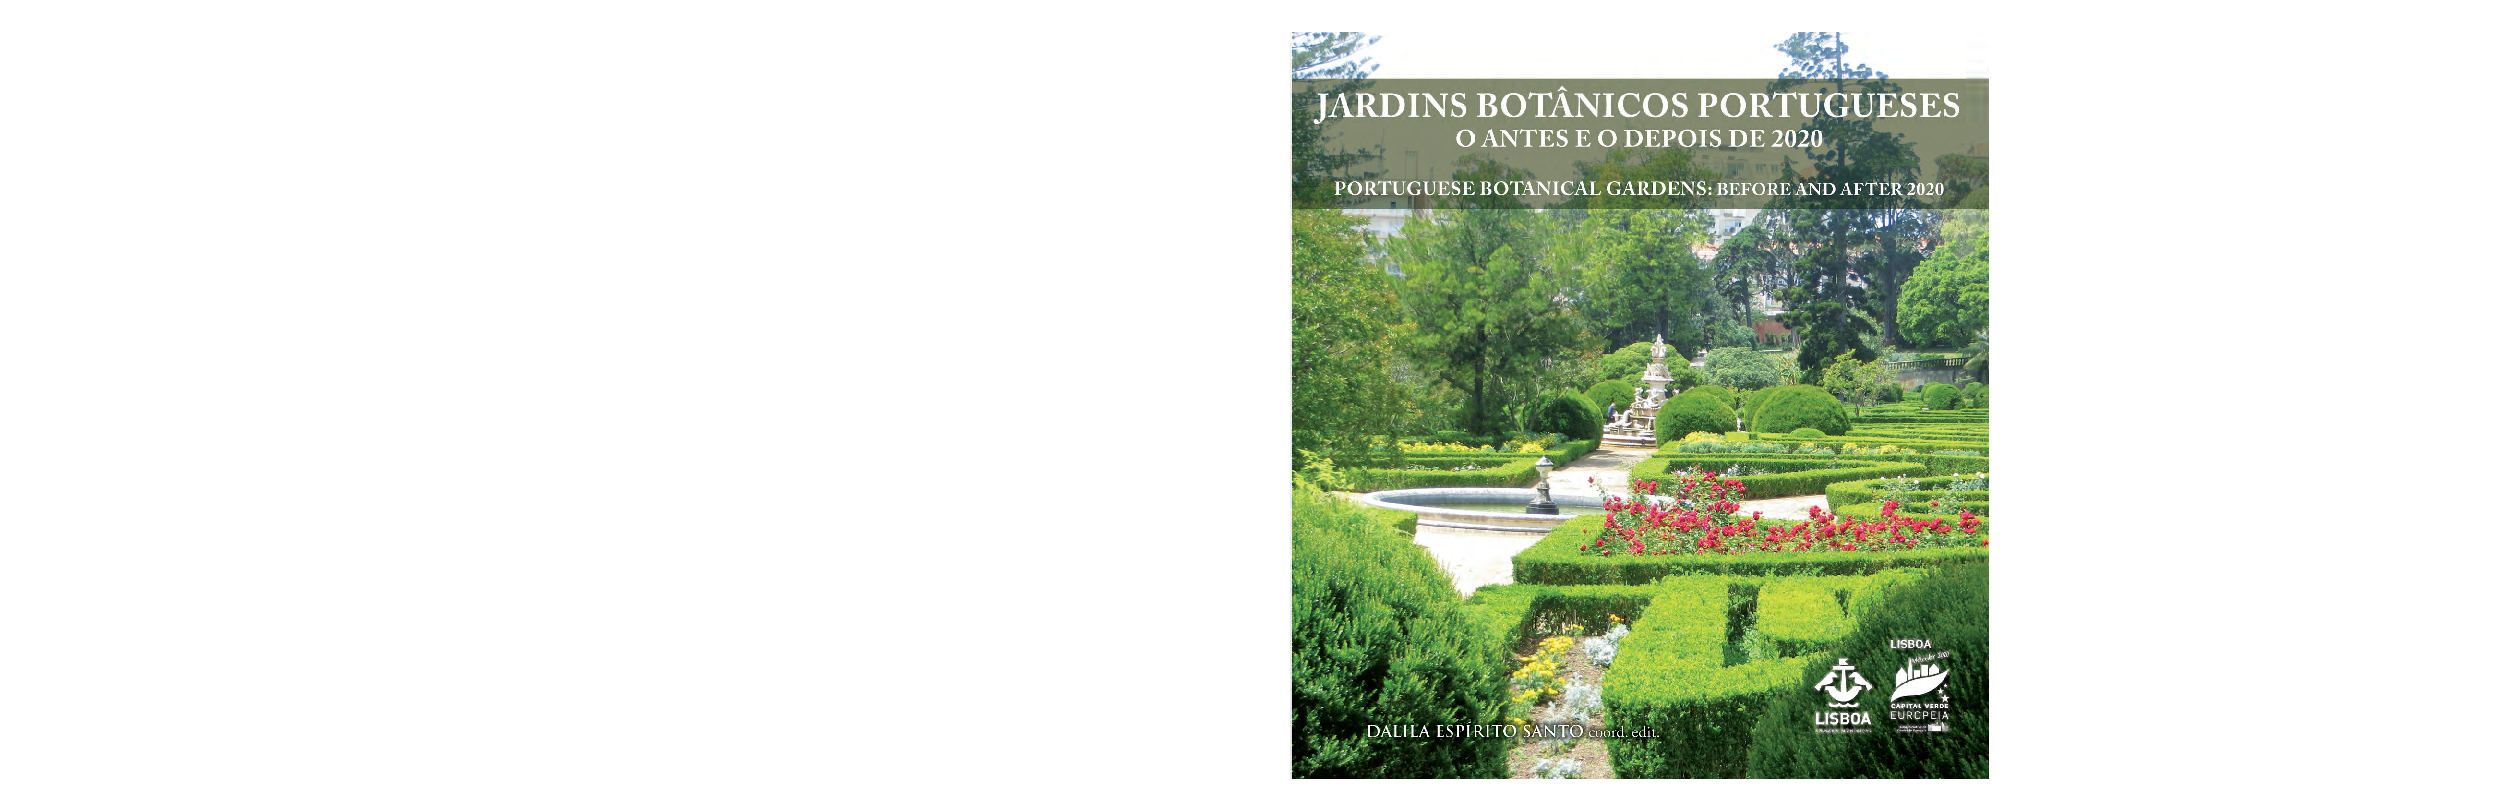 Jardins Botânicos Portugueses